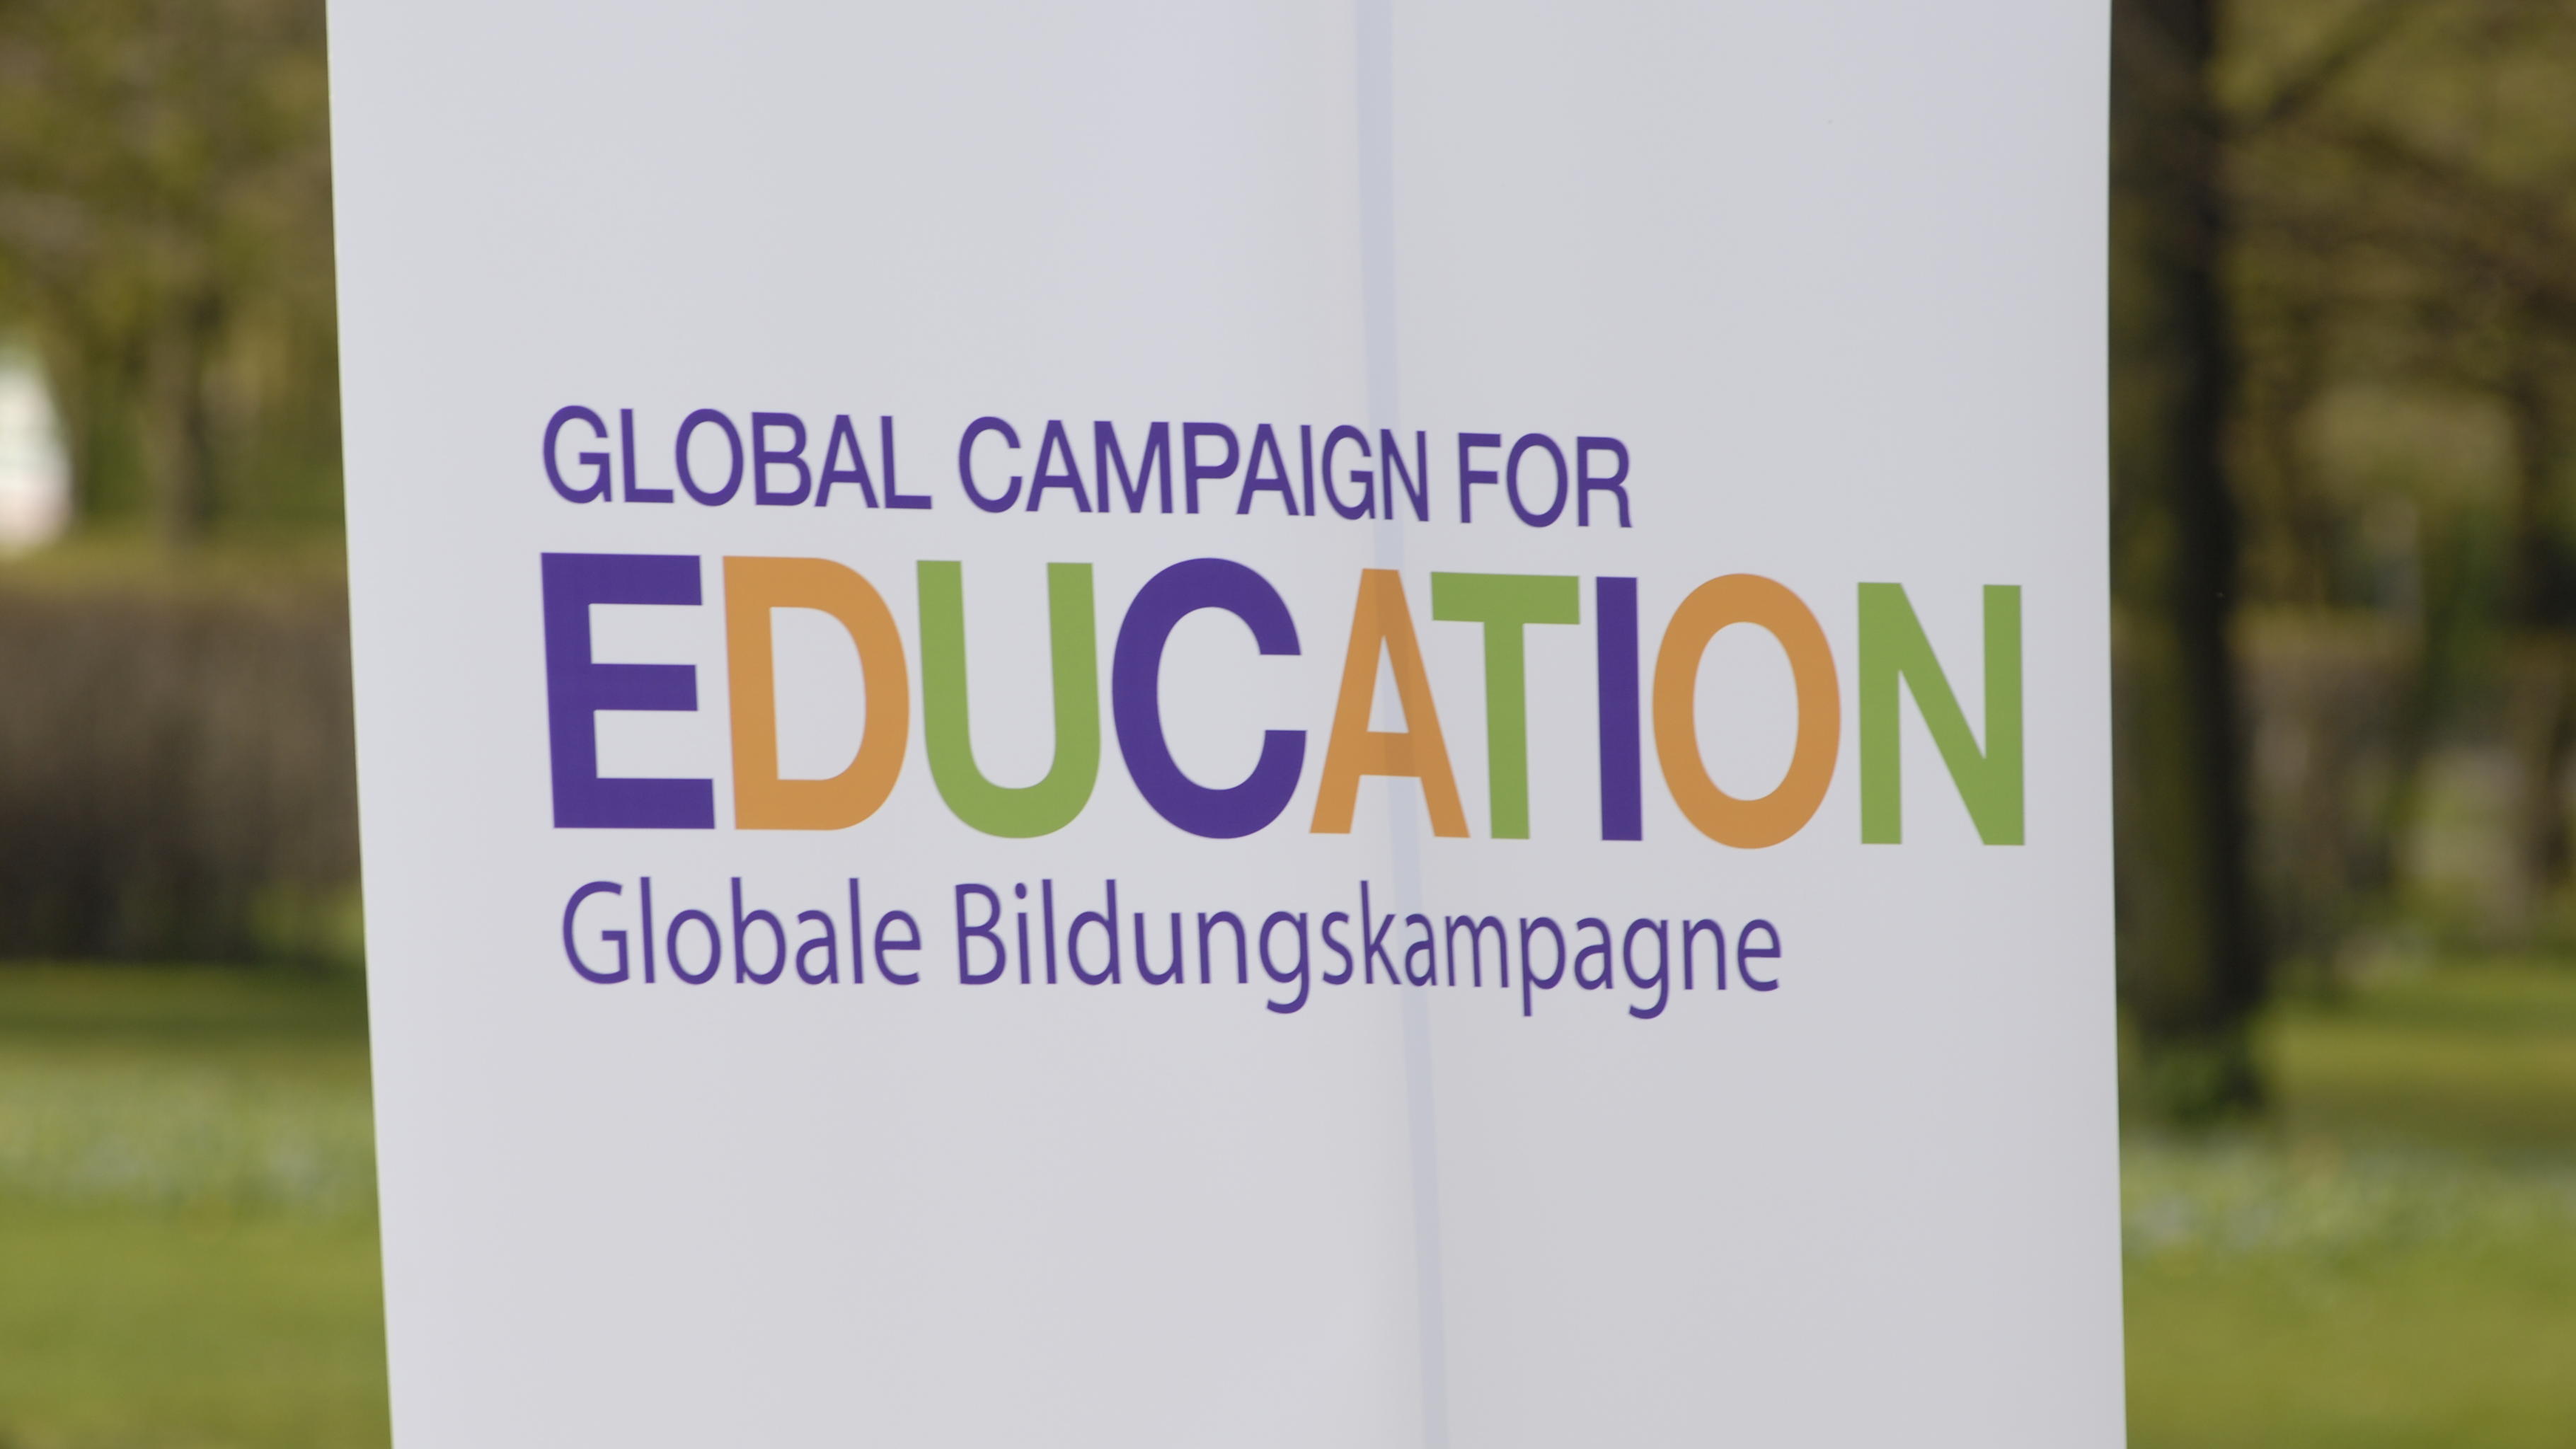 Foto: Global Campaign for Education - Globale Bildungskampagne 